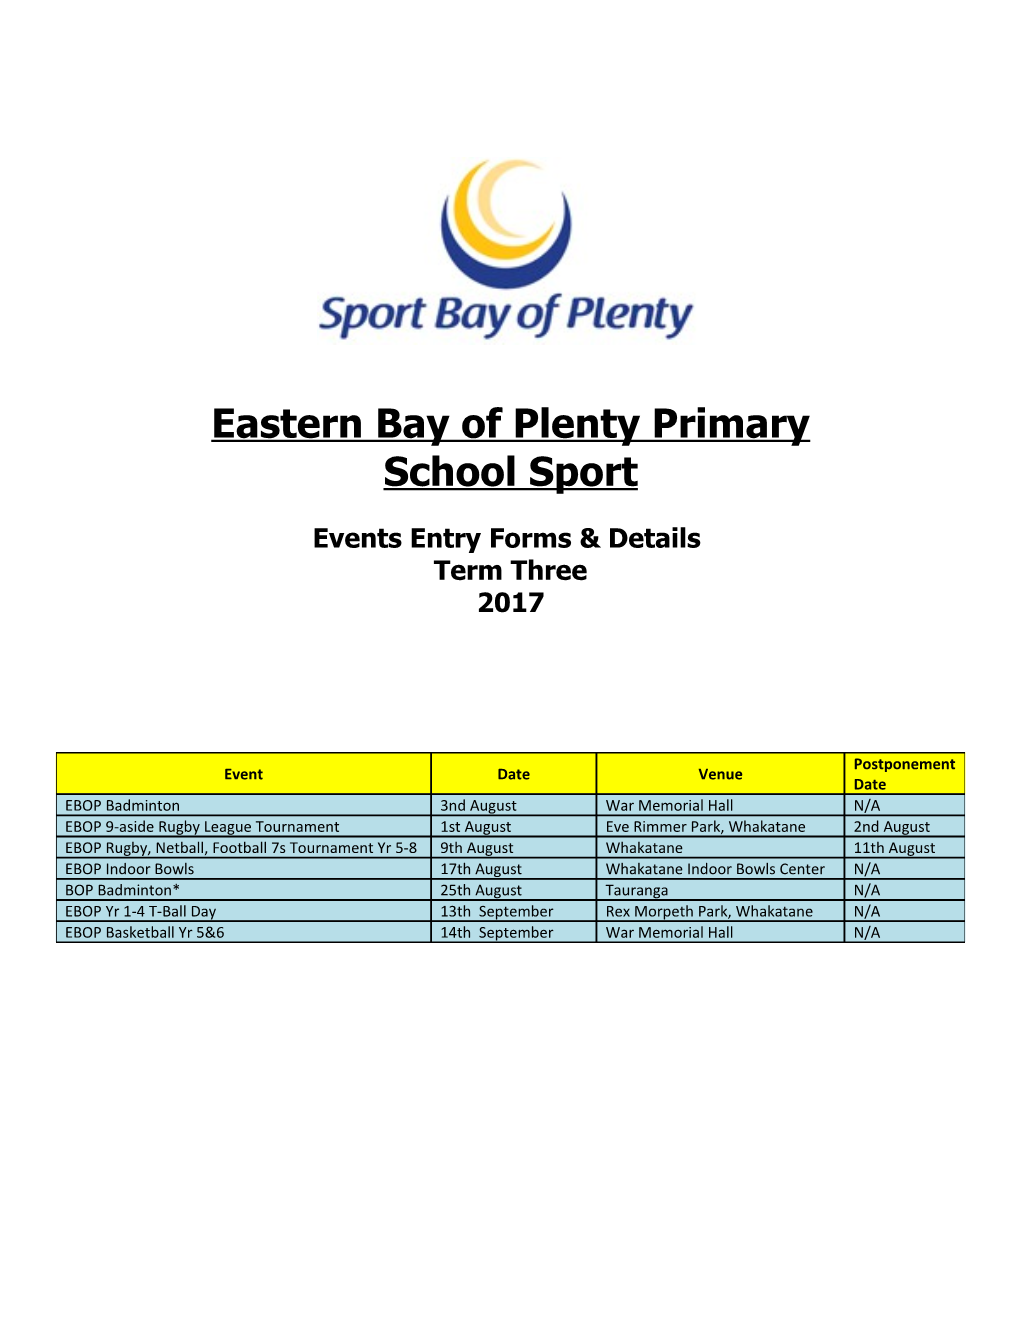 Eastern Bay of Plenty Primary School Sport